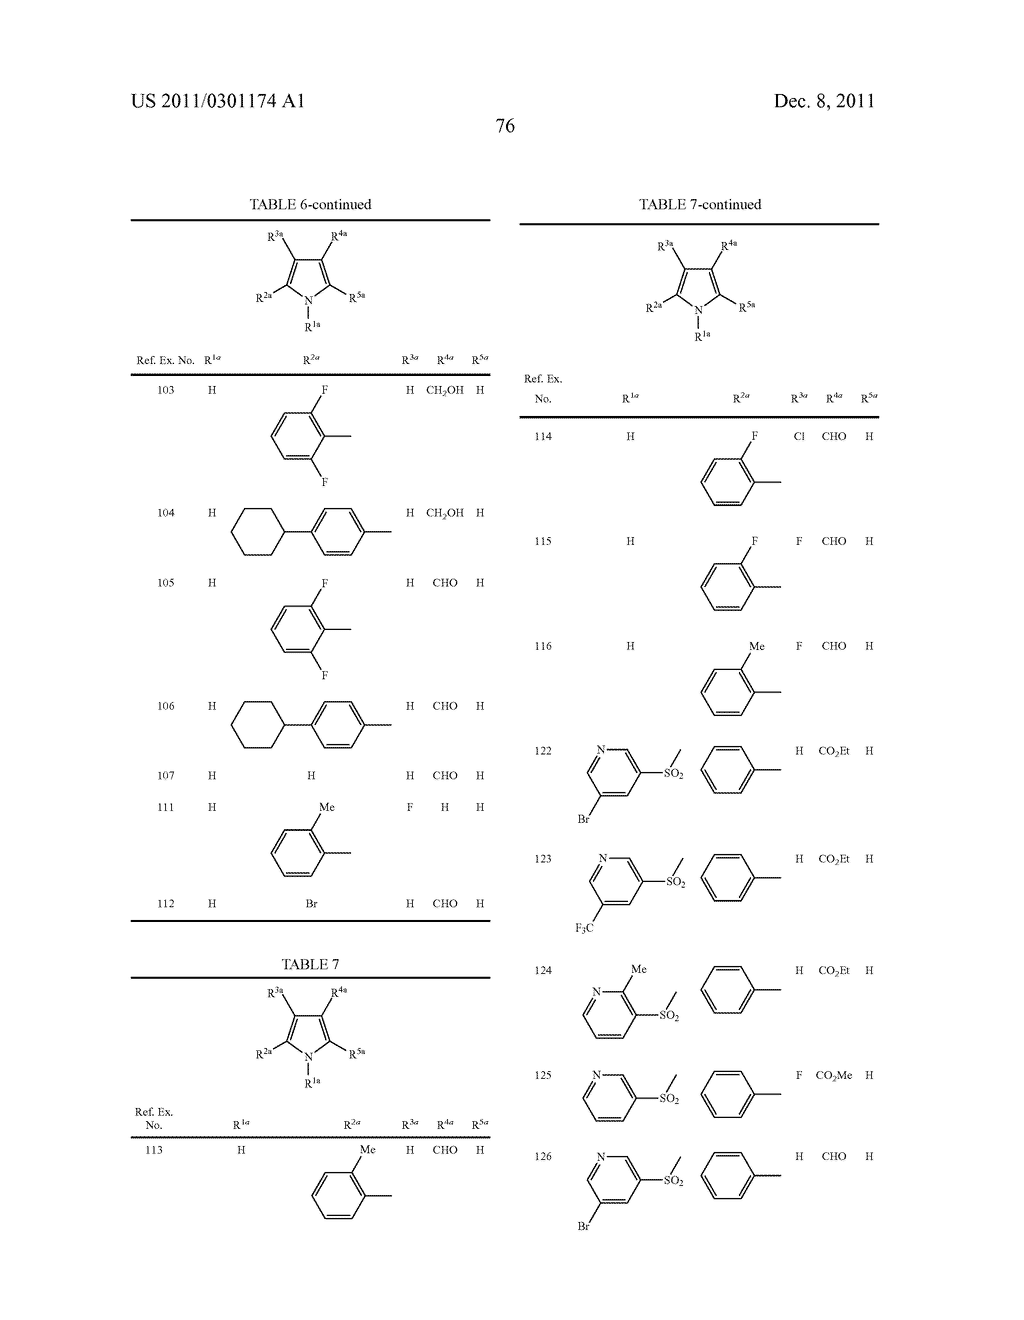 1-HETEROCYCLYLSULFONYL, 3-AMINOMETHYL, 5- (HETERO-) ARYL SUBSTITUTED     1-H-PYRROLE DERIVATIVES AS ACID SECRETION INHIBITORS - diagram, schematic, and image 77